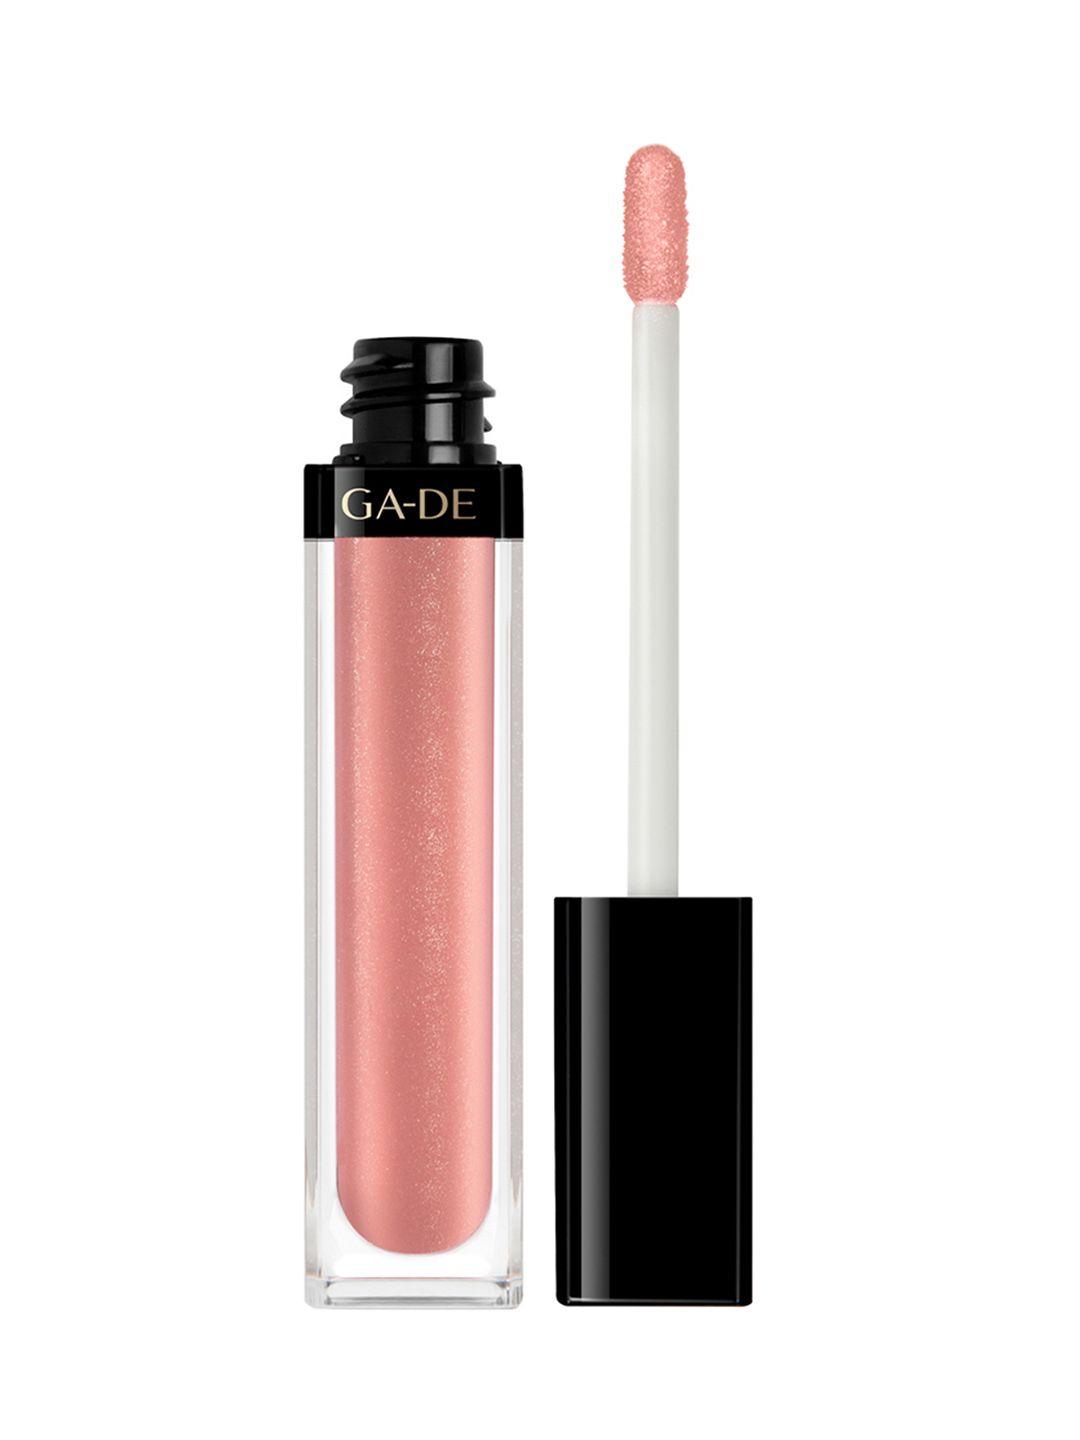 ga-de long lasting & moisturizing crystal lights lip gloss 6ml - petal light 819